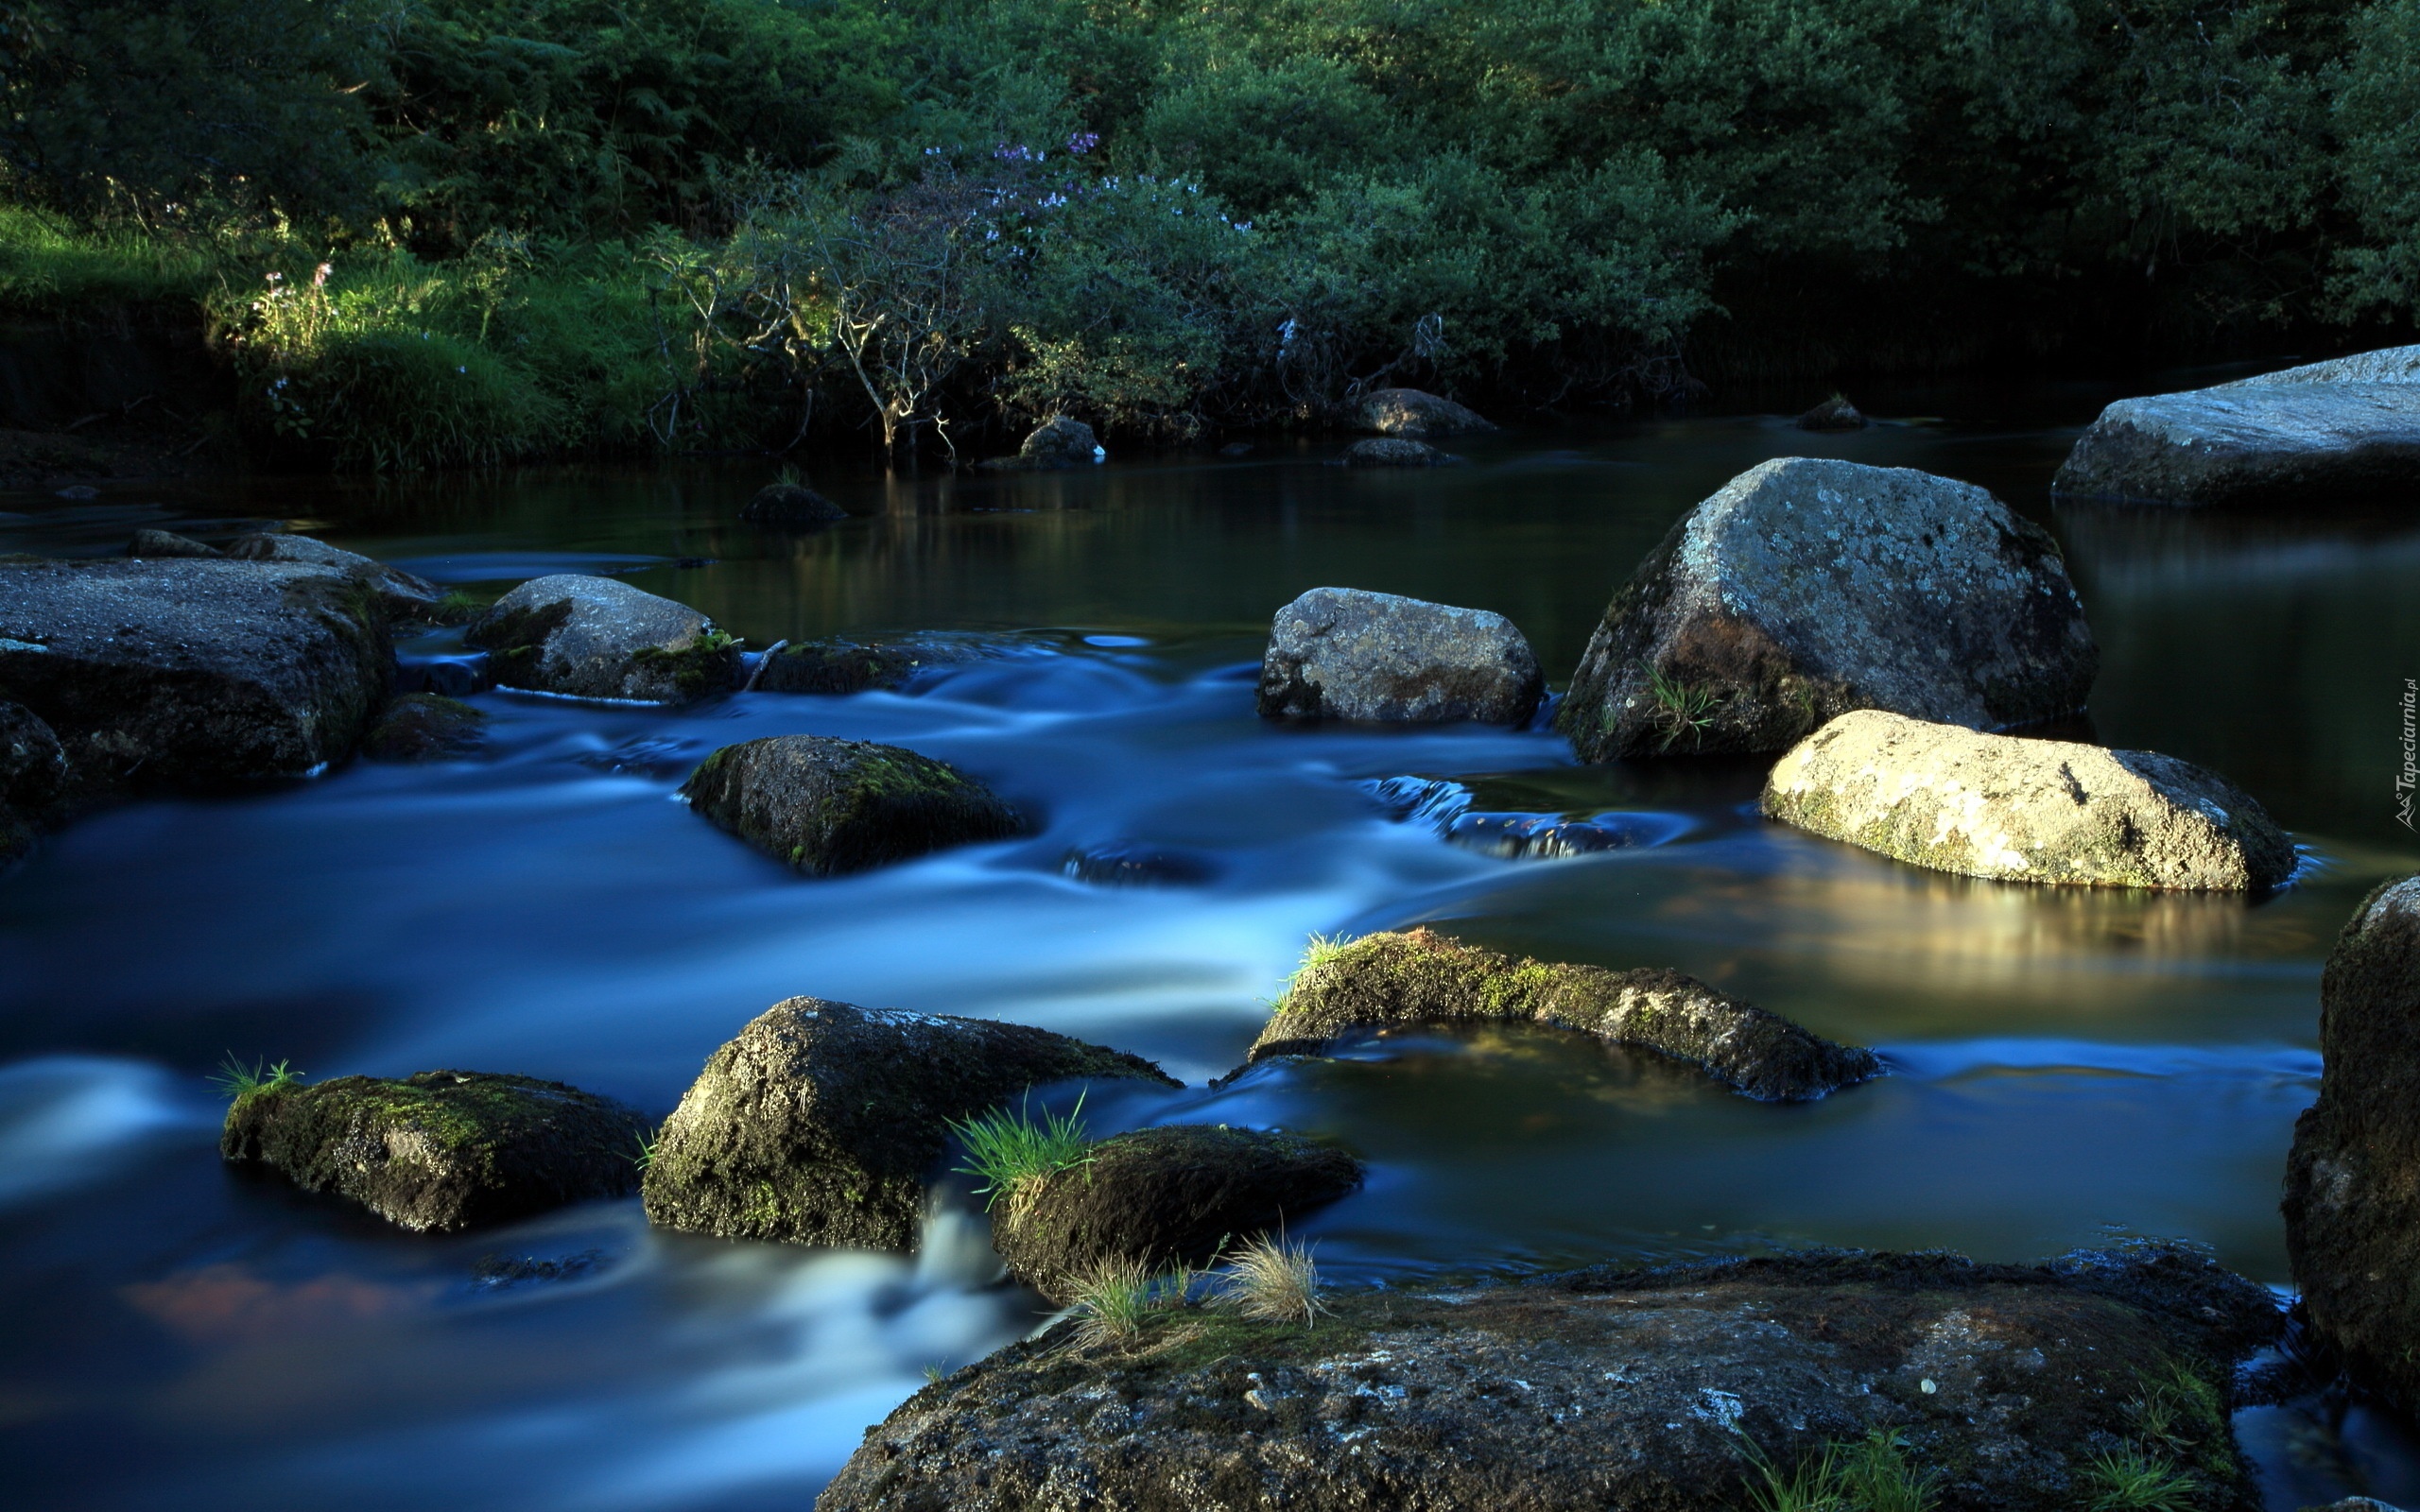 Stone river. Камни в реке. Ручей. Ручей с камнями. Природа река камни.